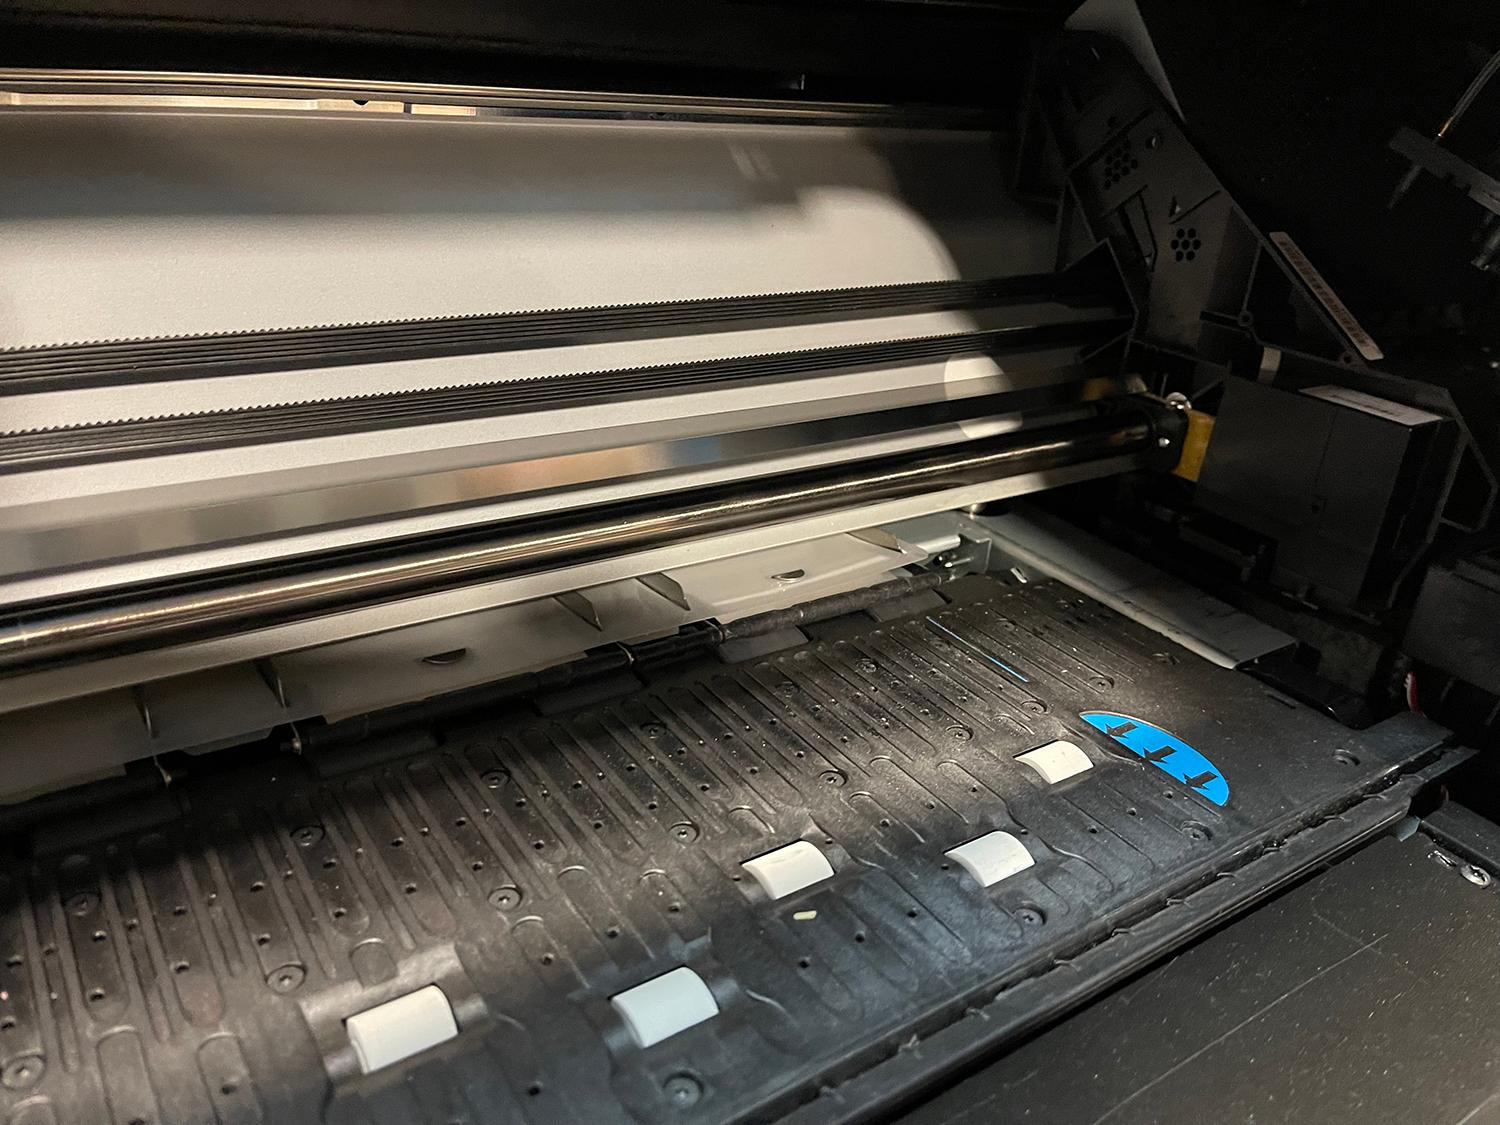 HP Z6600 - 64" photo production printer ulta clean (Dallas, Texas)